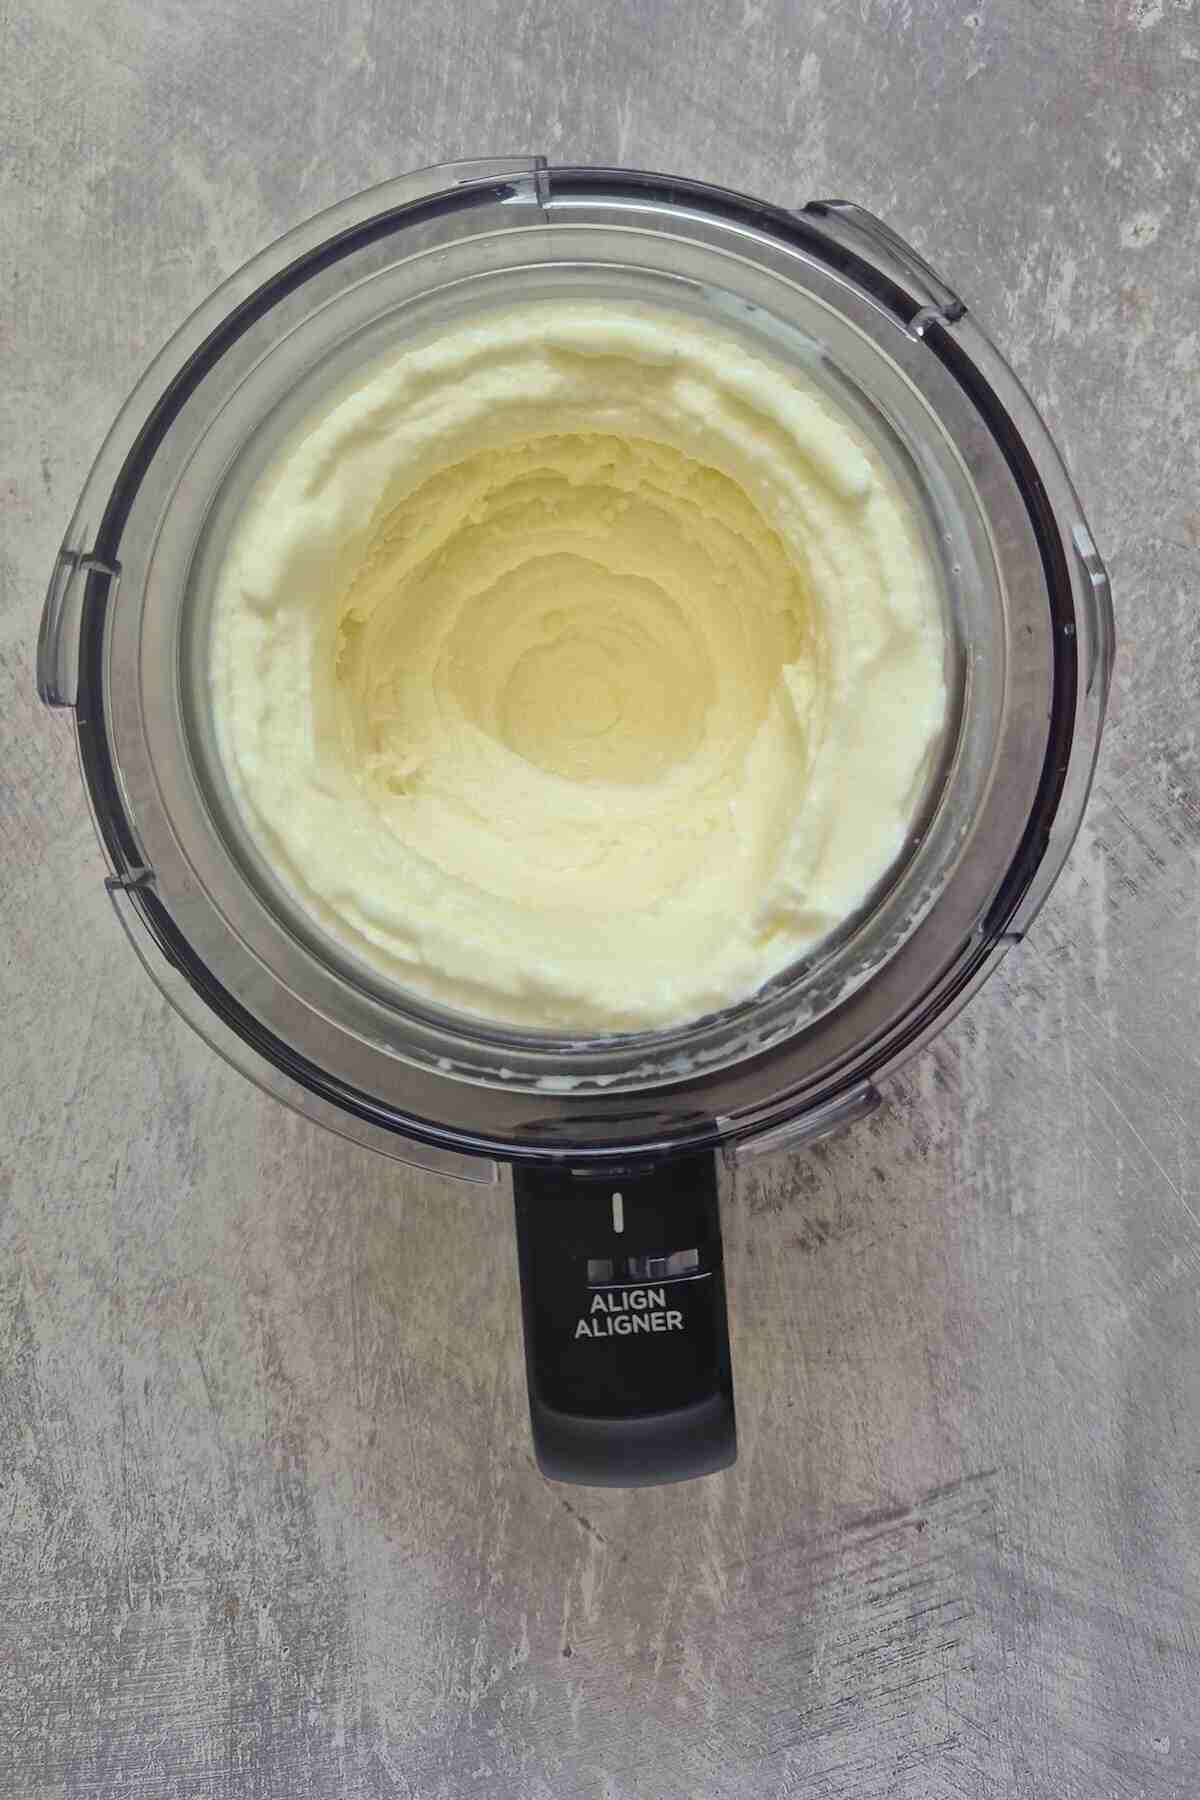 the processed frozen yogurt inside the Ninja Creami bowl.